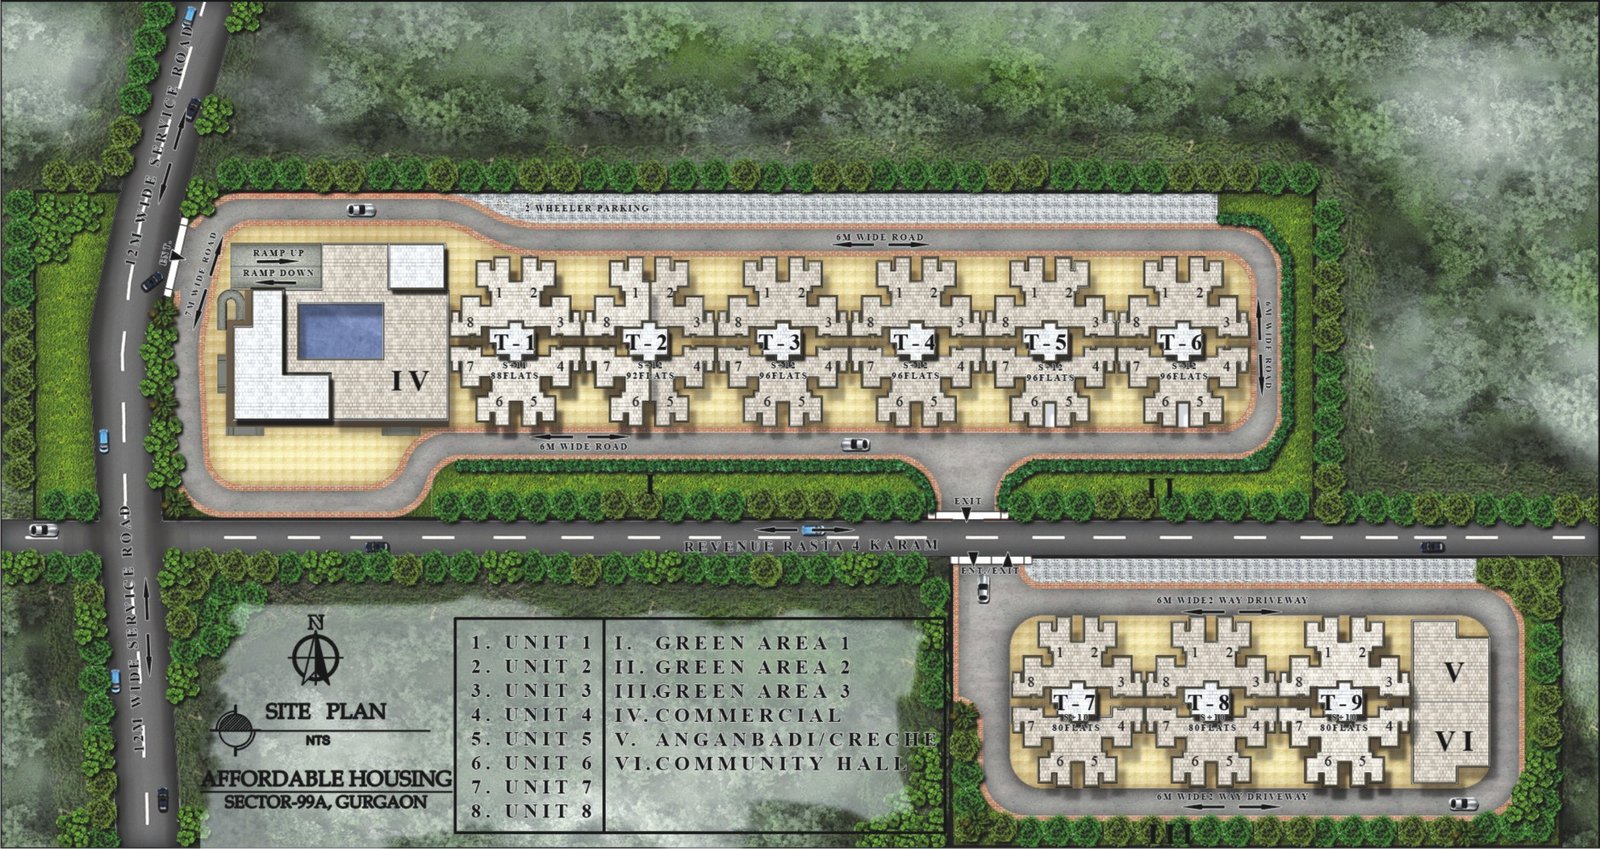 Pareena Laxmi Apartments Site Plan